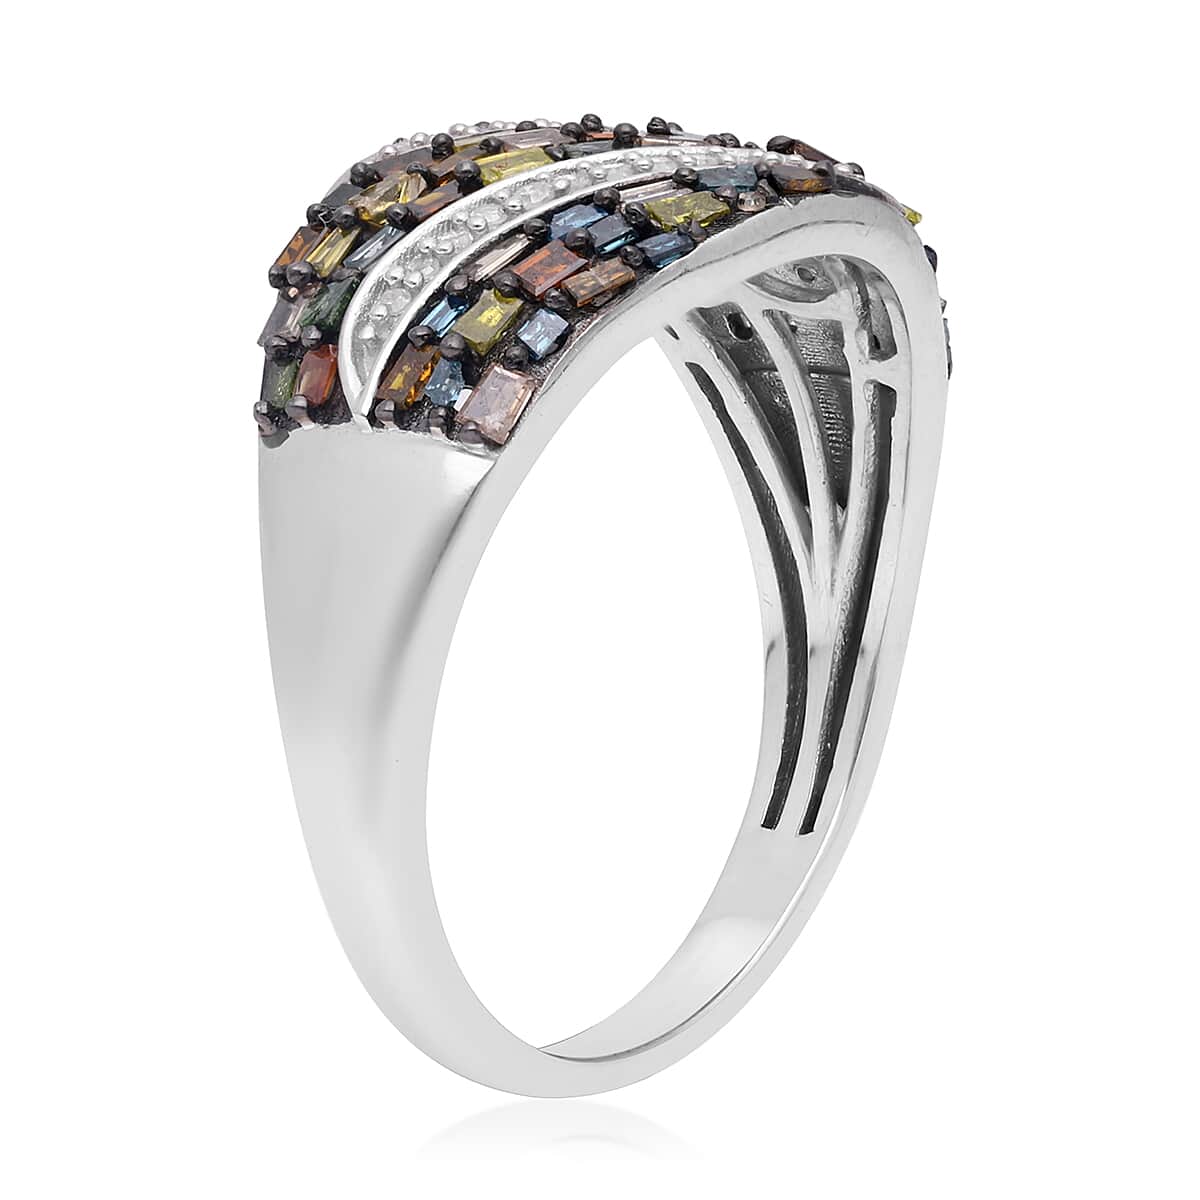 Buy Multi Diamond Ring in Platinum Over Sterling Silver (Size 10.0